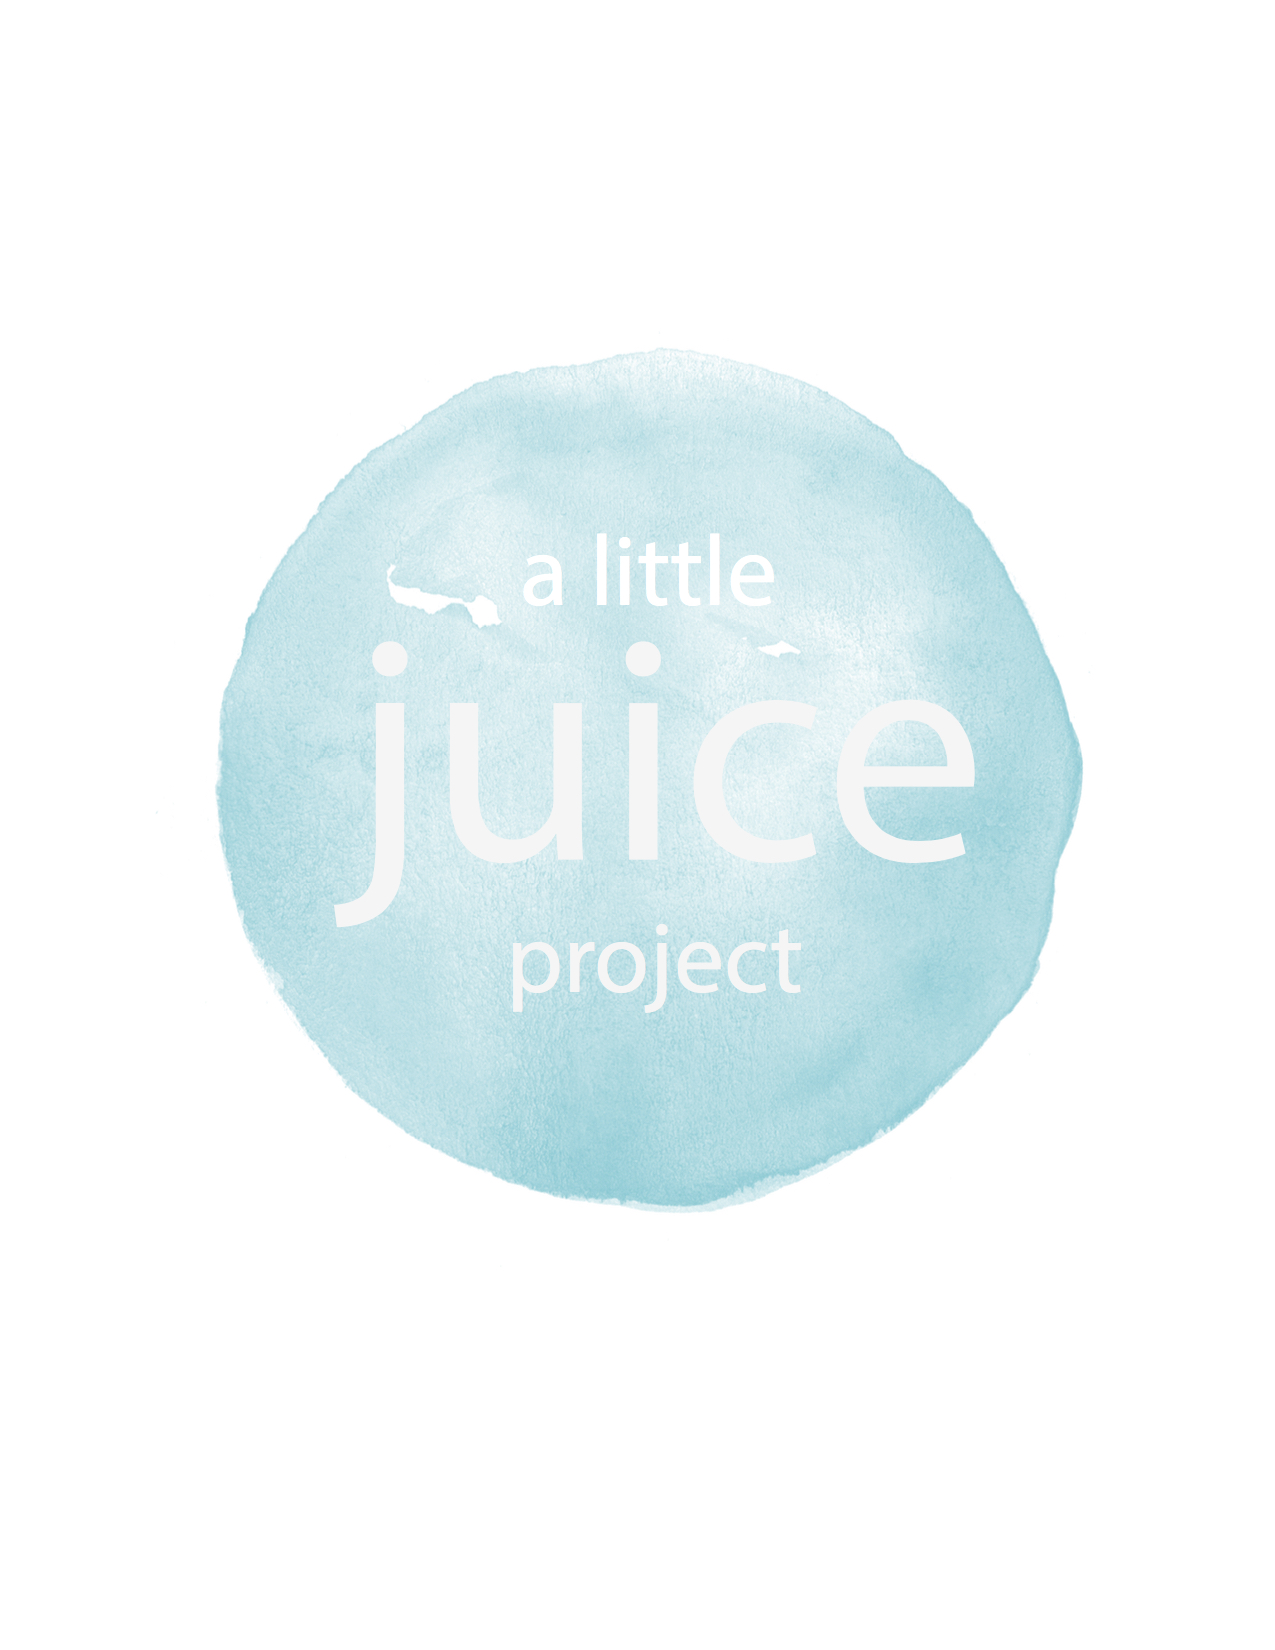 a Little Juice Project logo